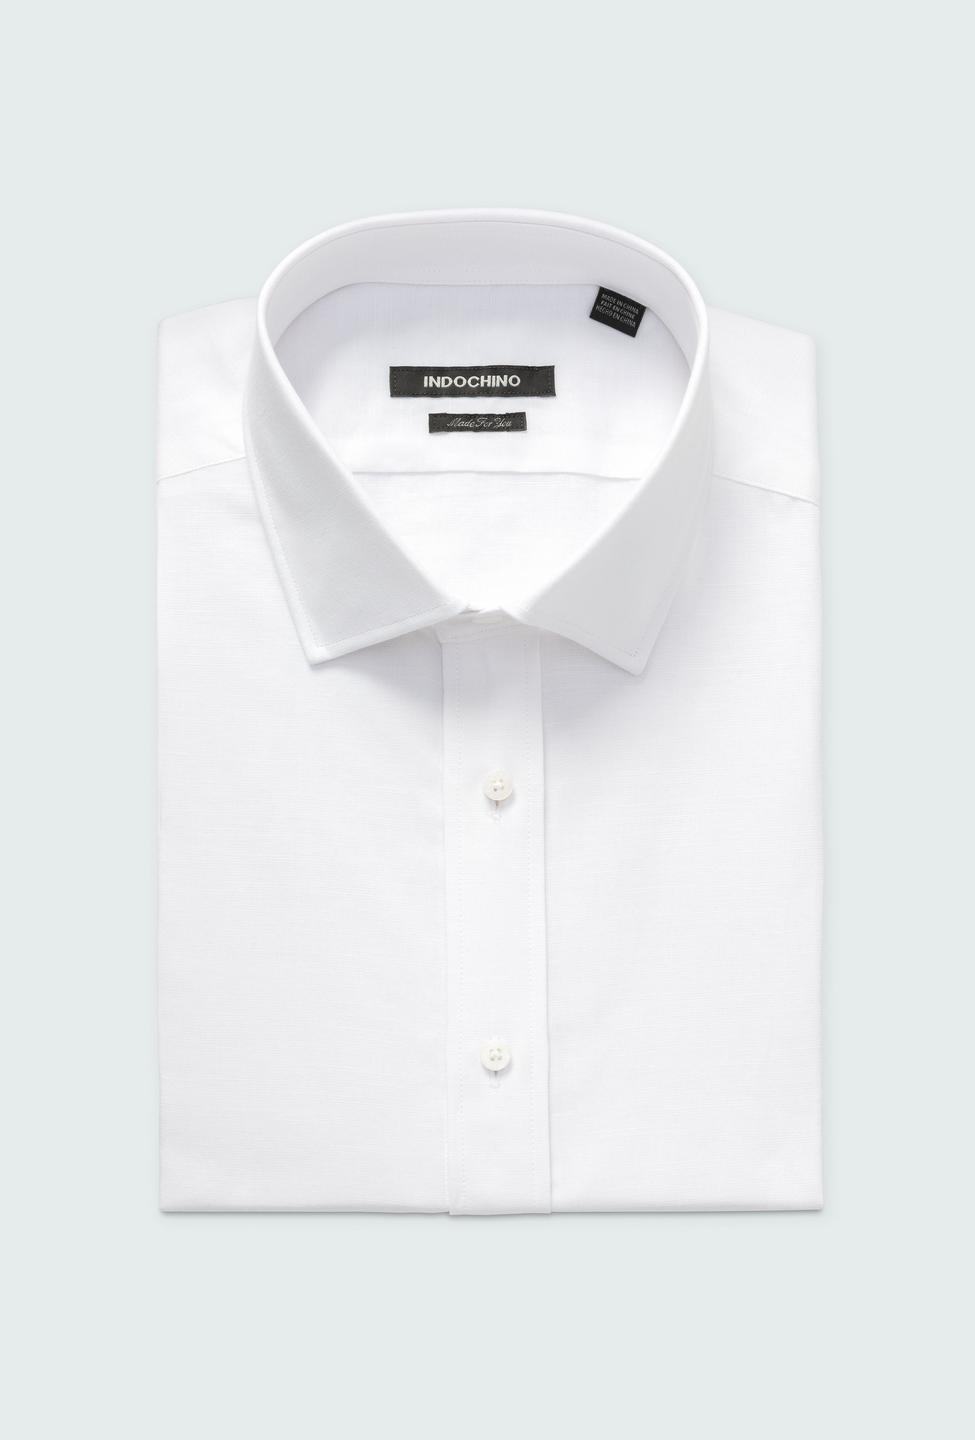 White shirt - Sudbury Solid Design from Premium Indochino Collection